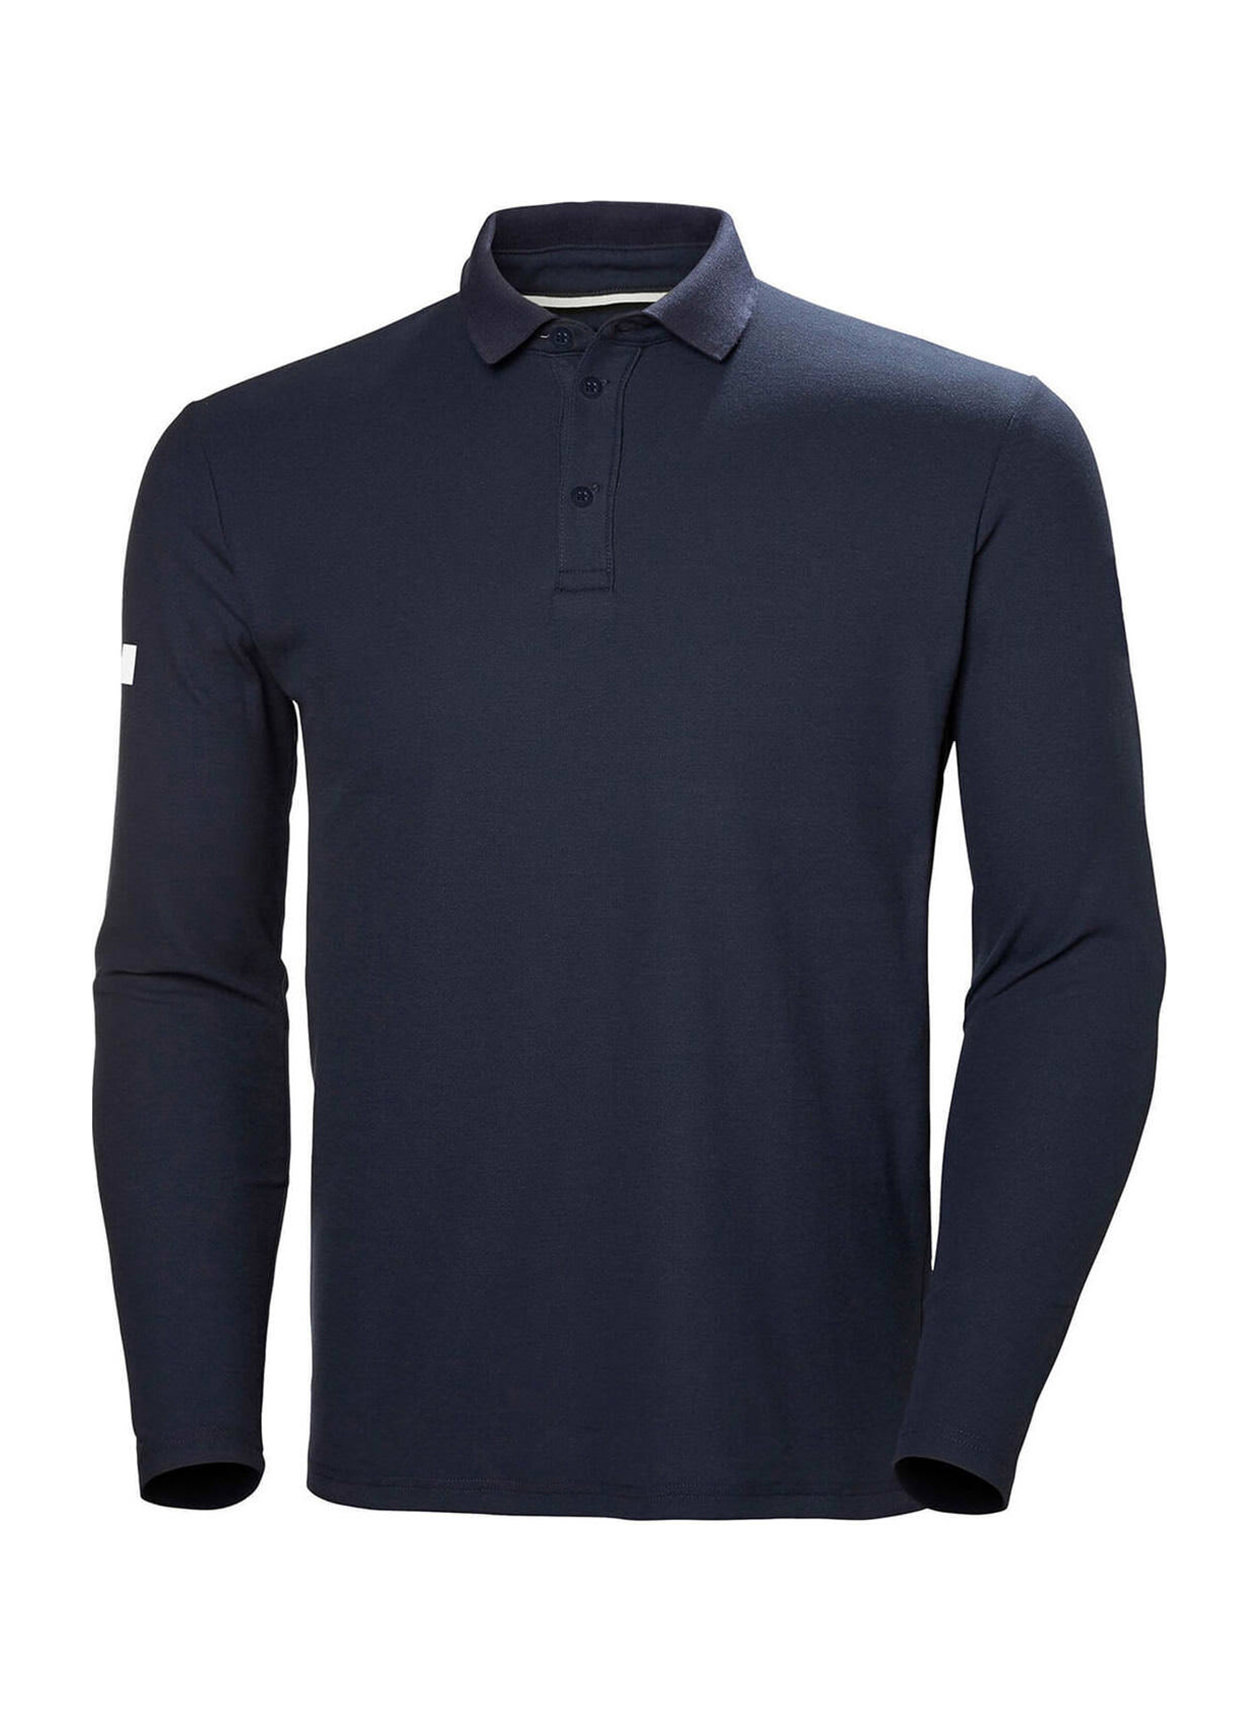 Helly Hansen Men's Navy Crewline Long-Sleeve Polo | Customized Polo Shirts